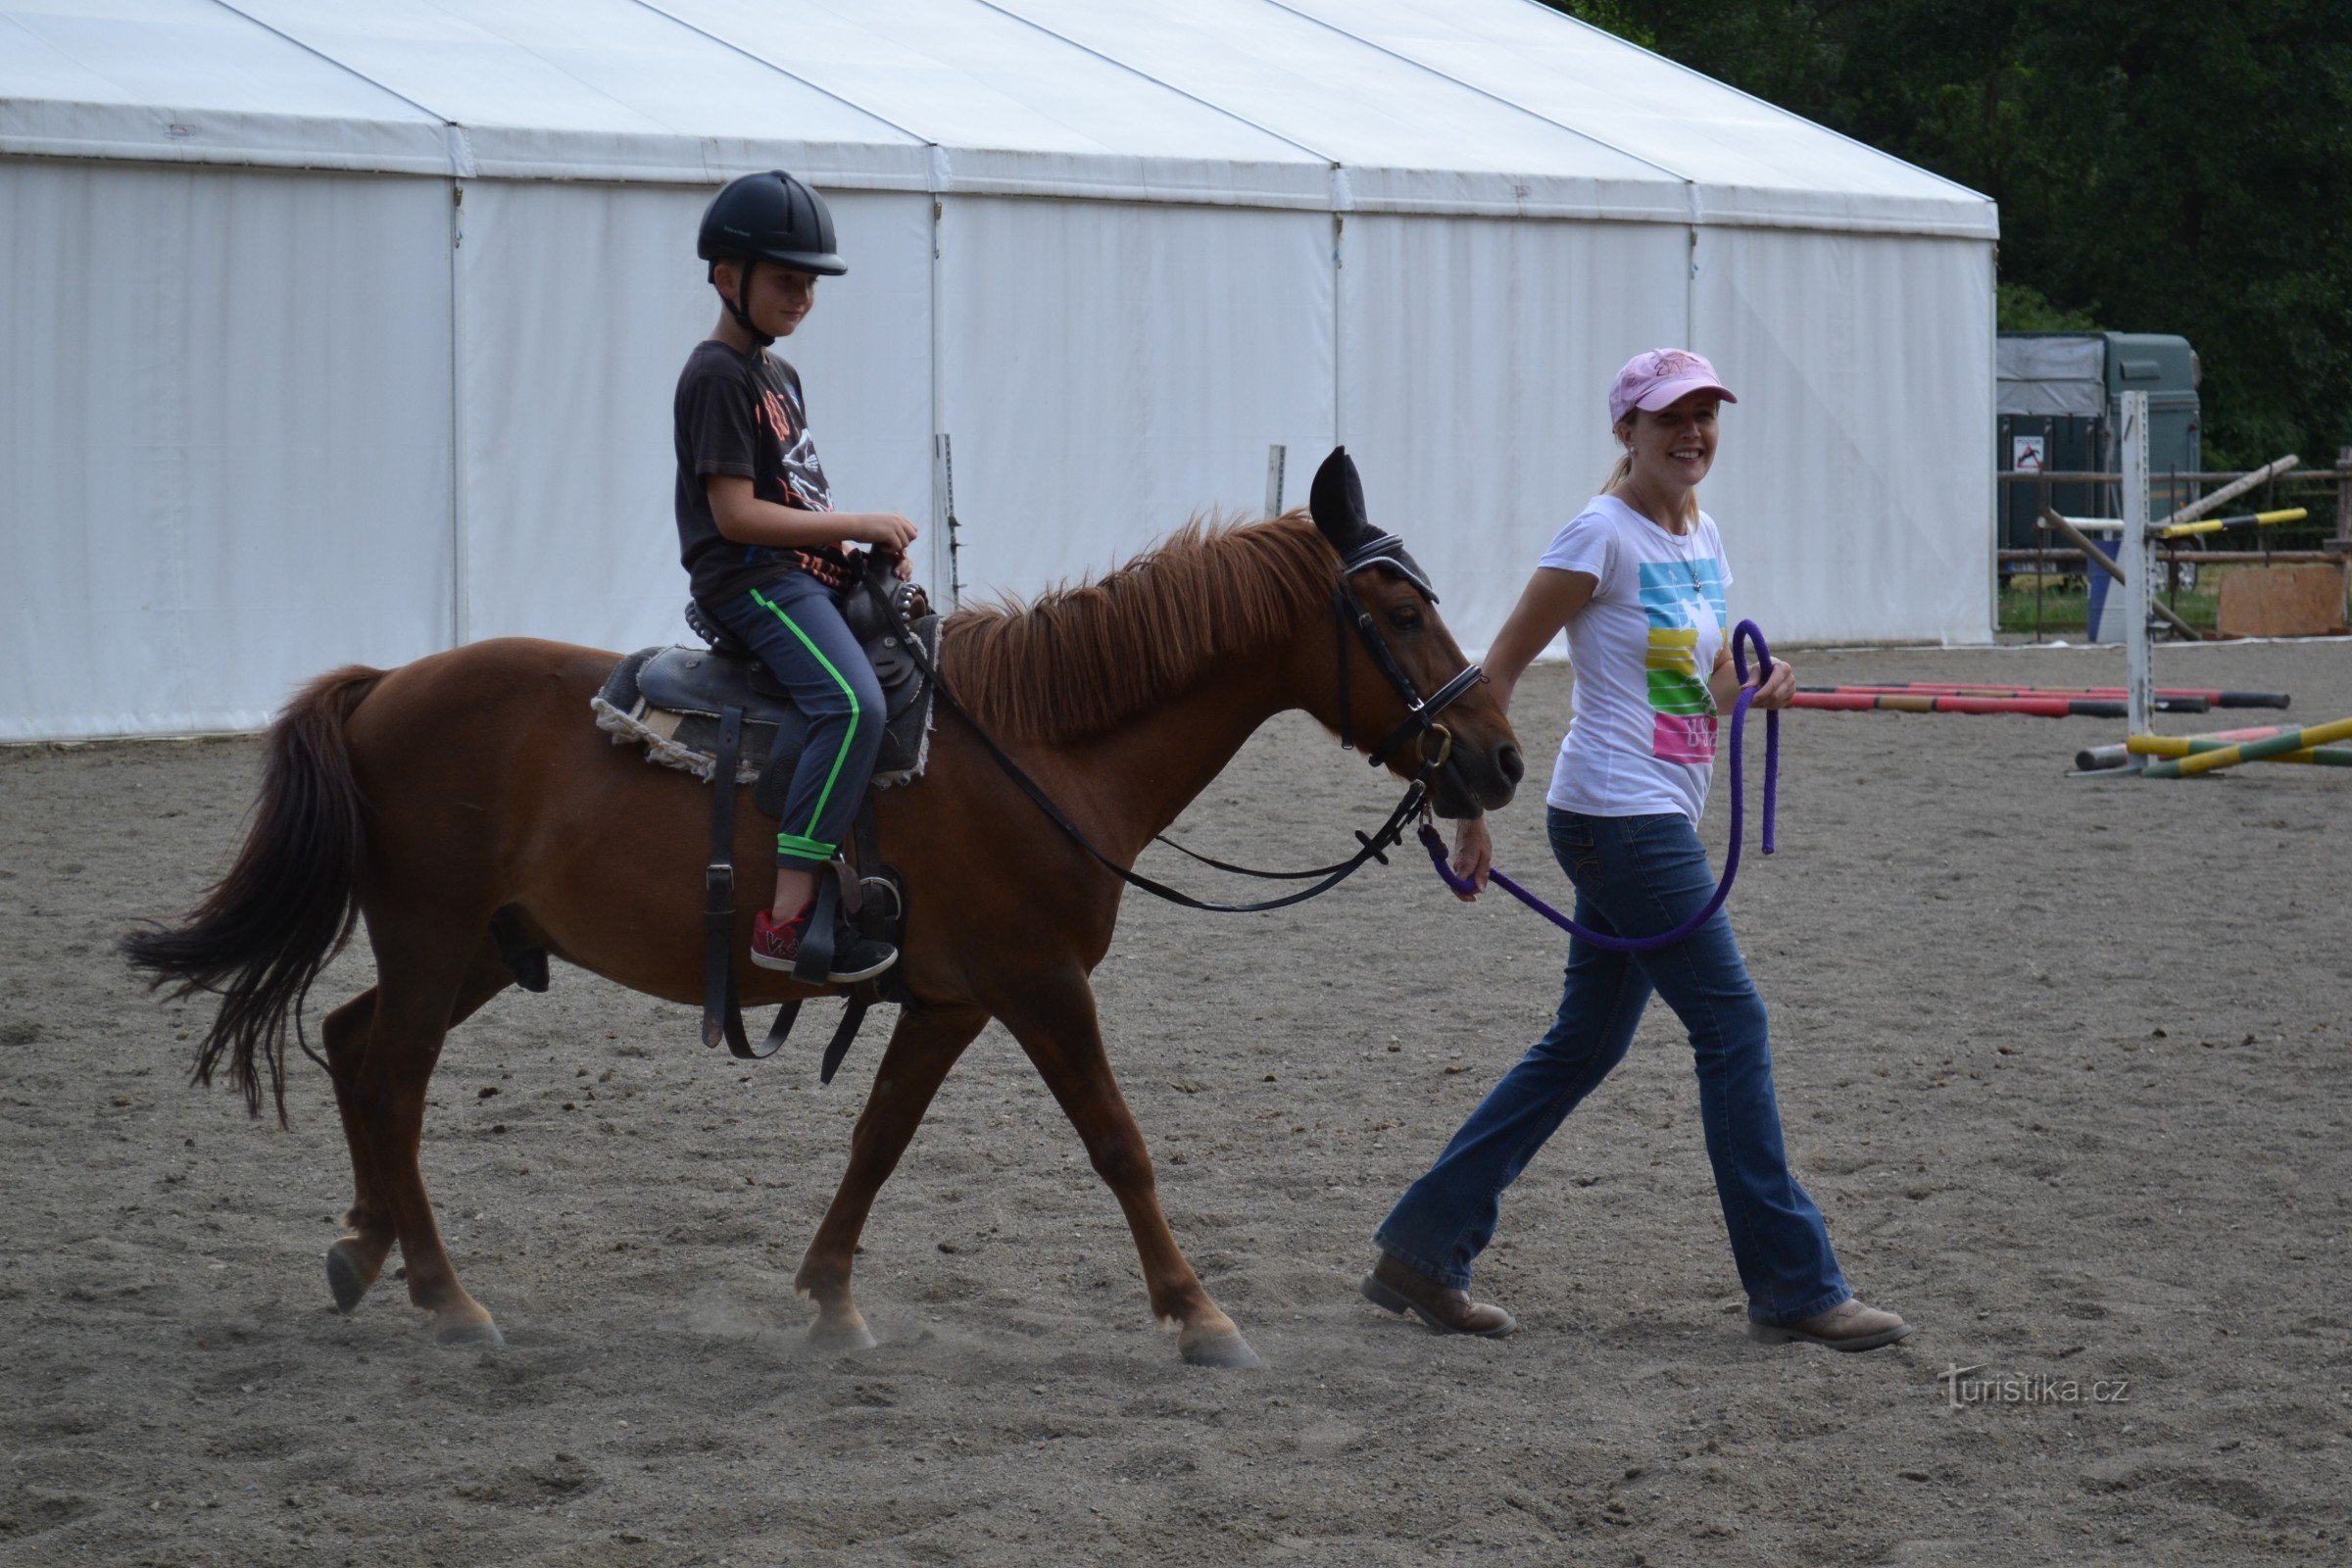 Horseback riding even for complete beginners